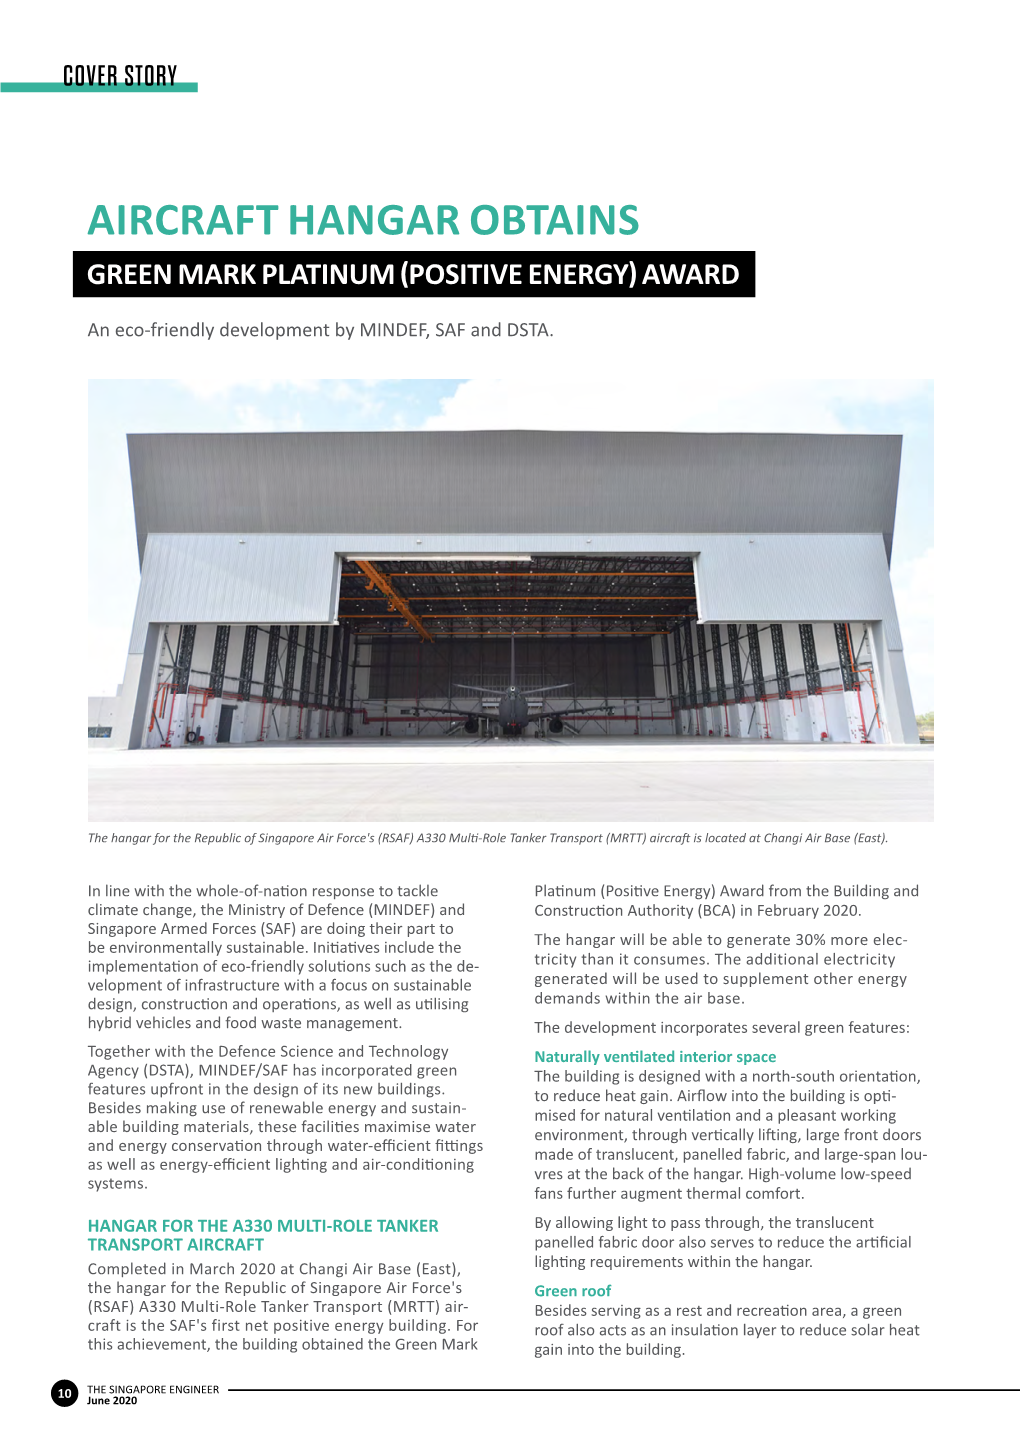 Aircraft Hangar Obtains Green Mark Platinum (Positive Energy) Award